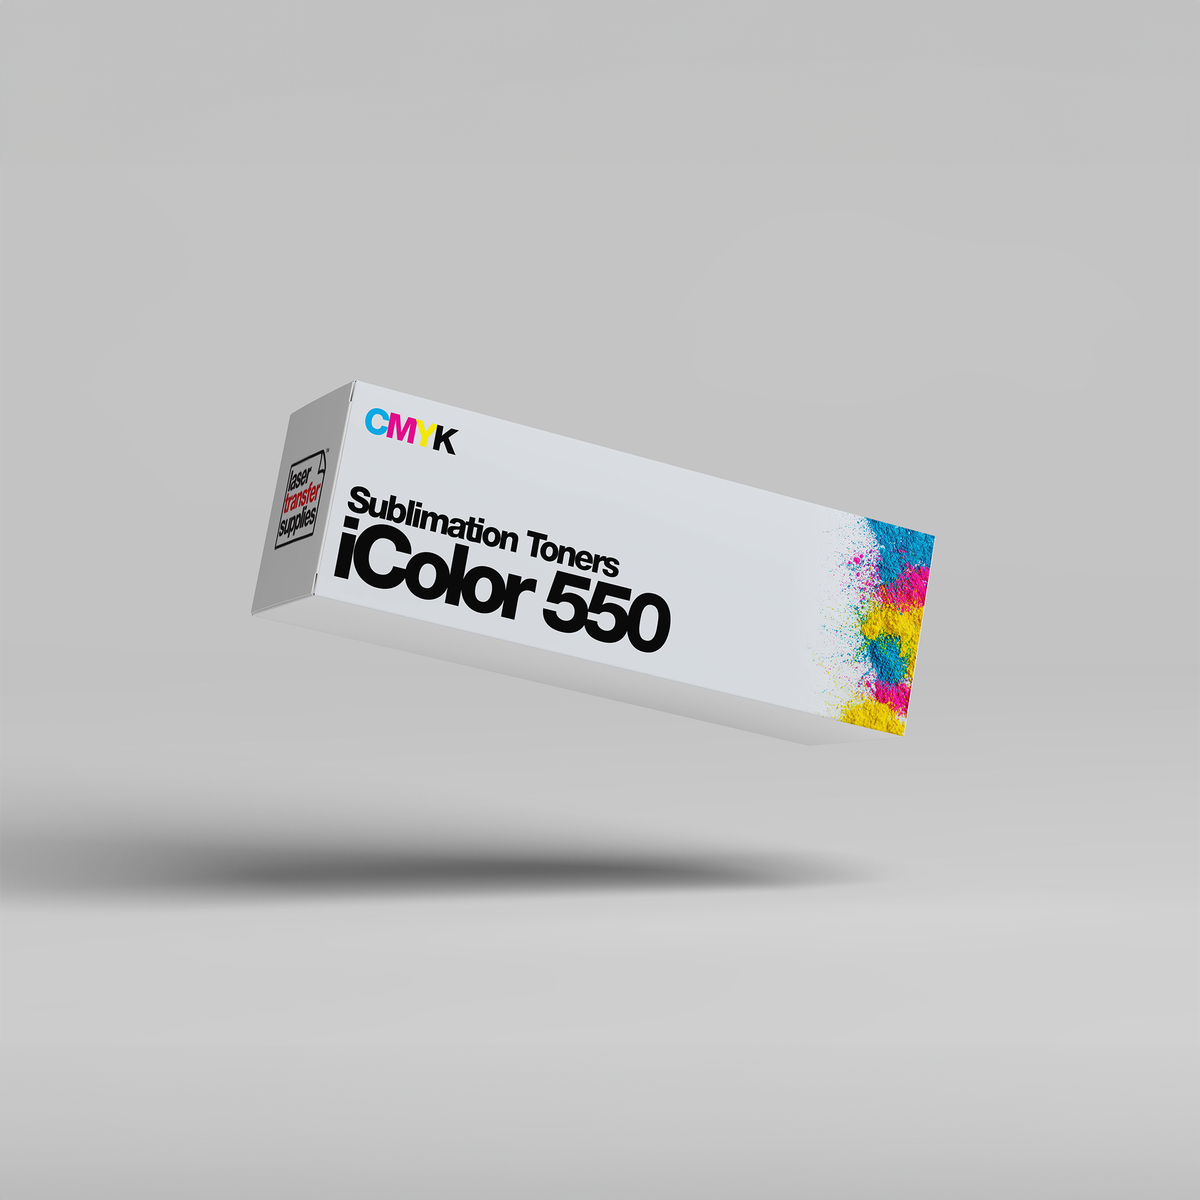 IColor 550 Sublimation Toner